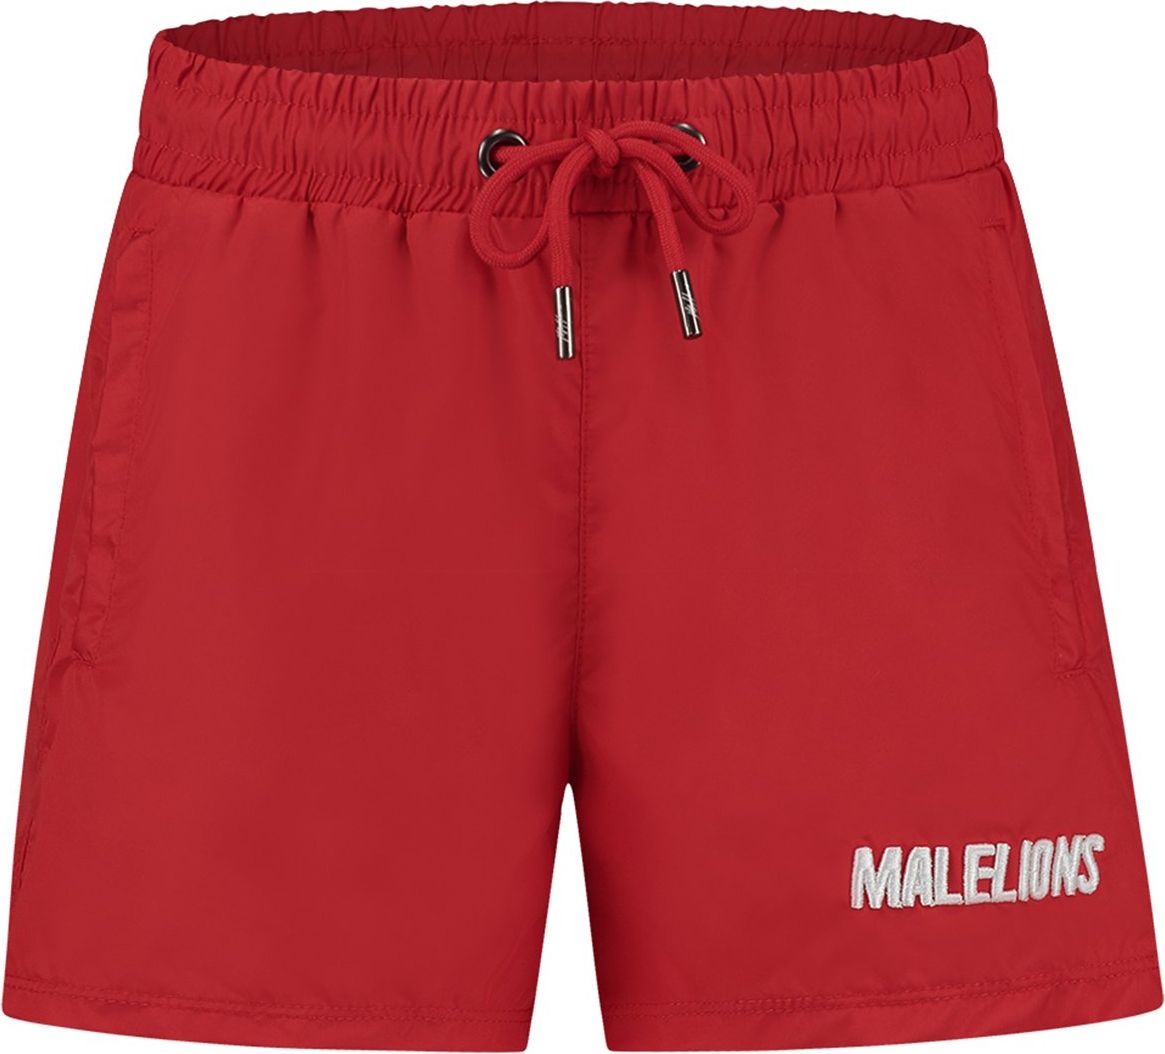 Malelions Junior Swimshort Nium - Red/White Rood